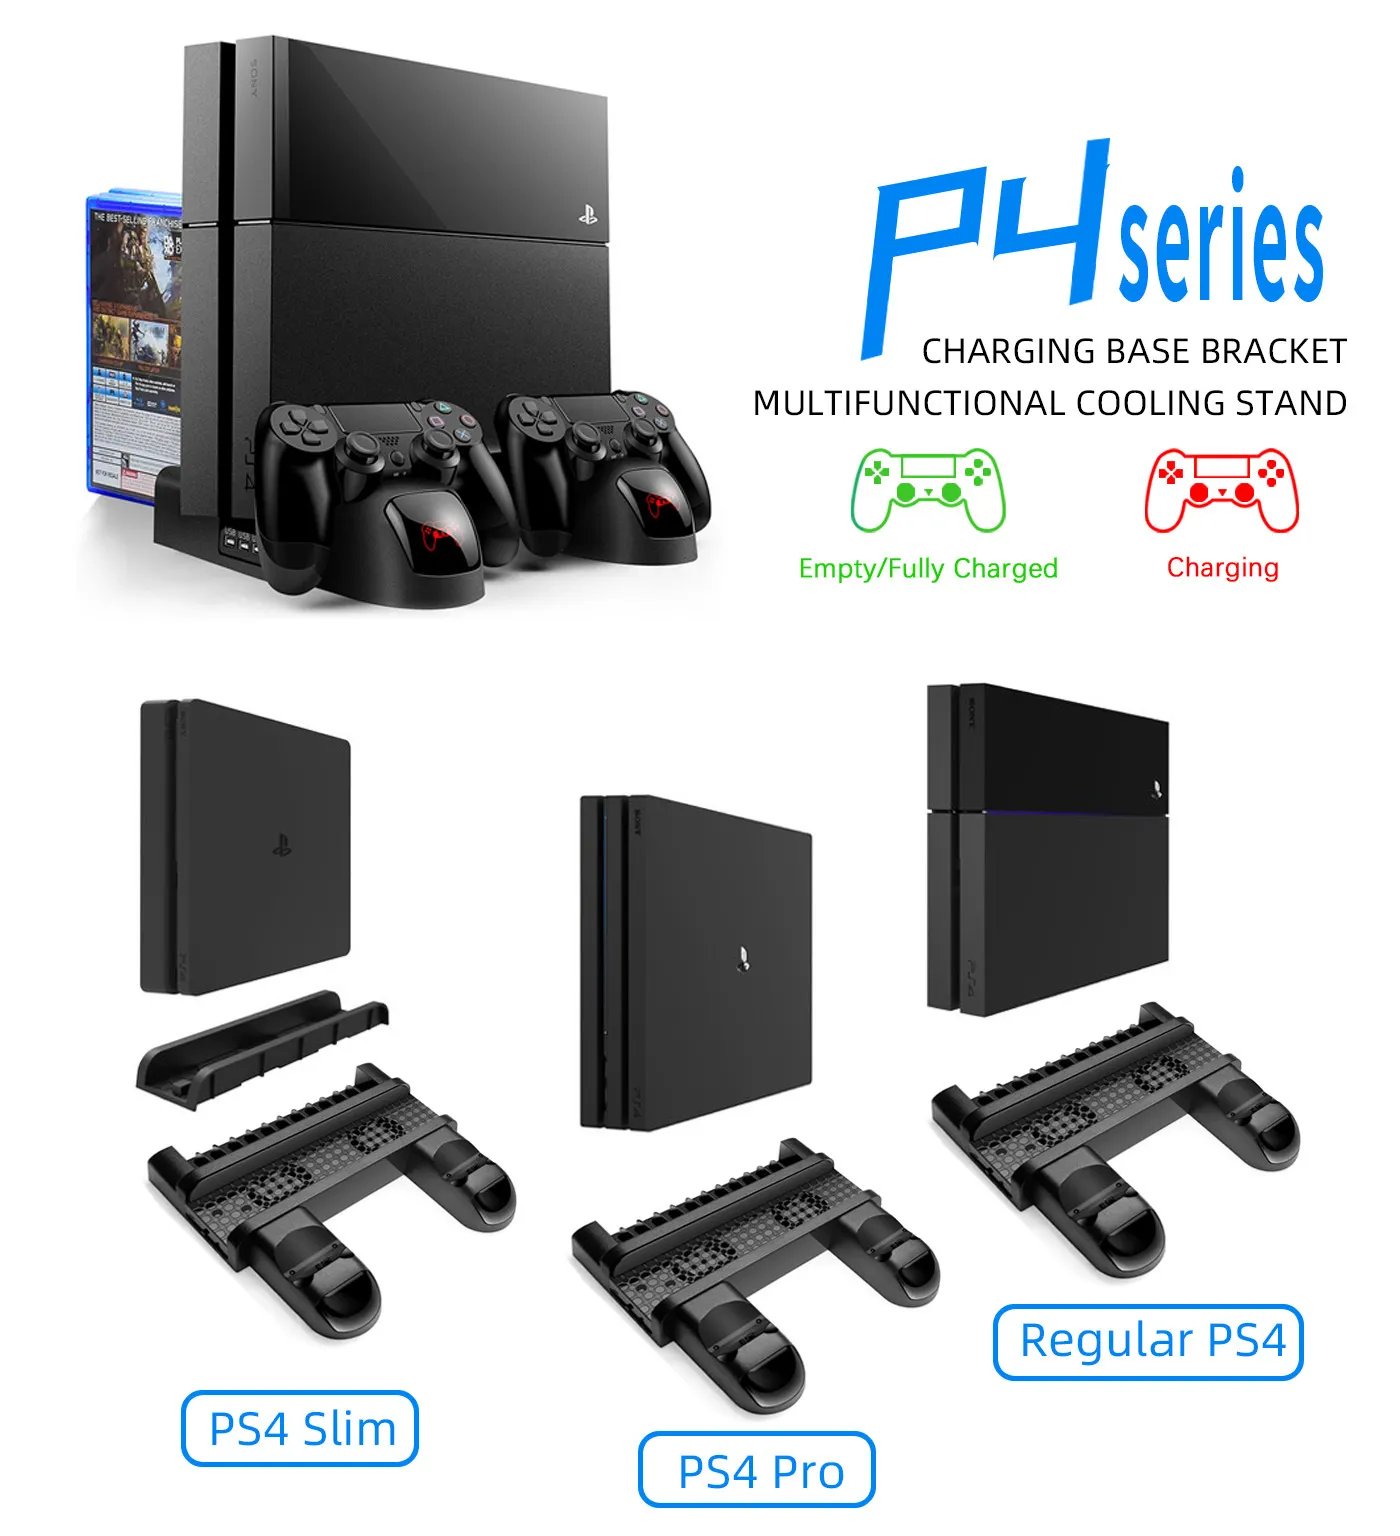 PS4のSLIM/PROの多機能冷却スタンド2デュアルショック用2ファン充電ベースブラケットUSBハブコントローラーアクセサリLED